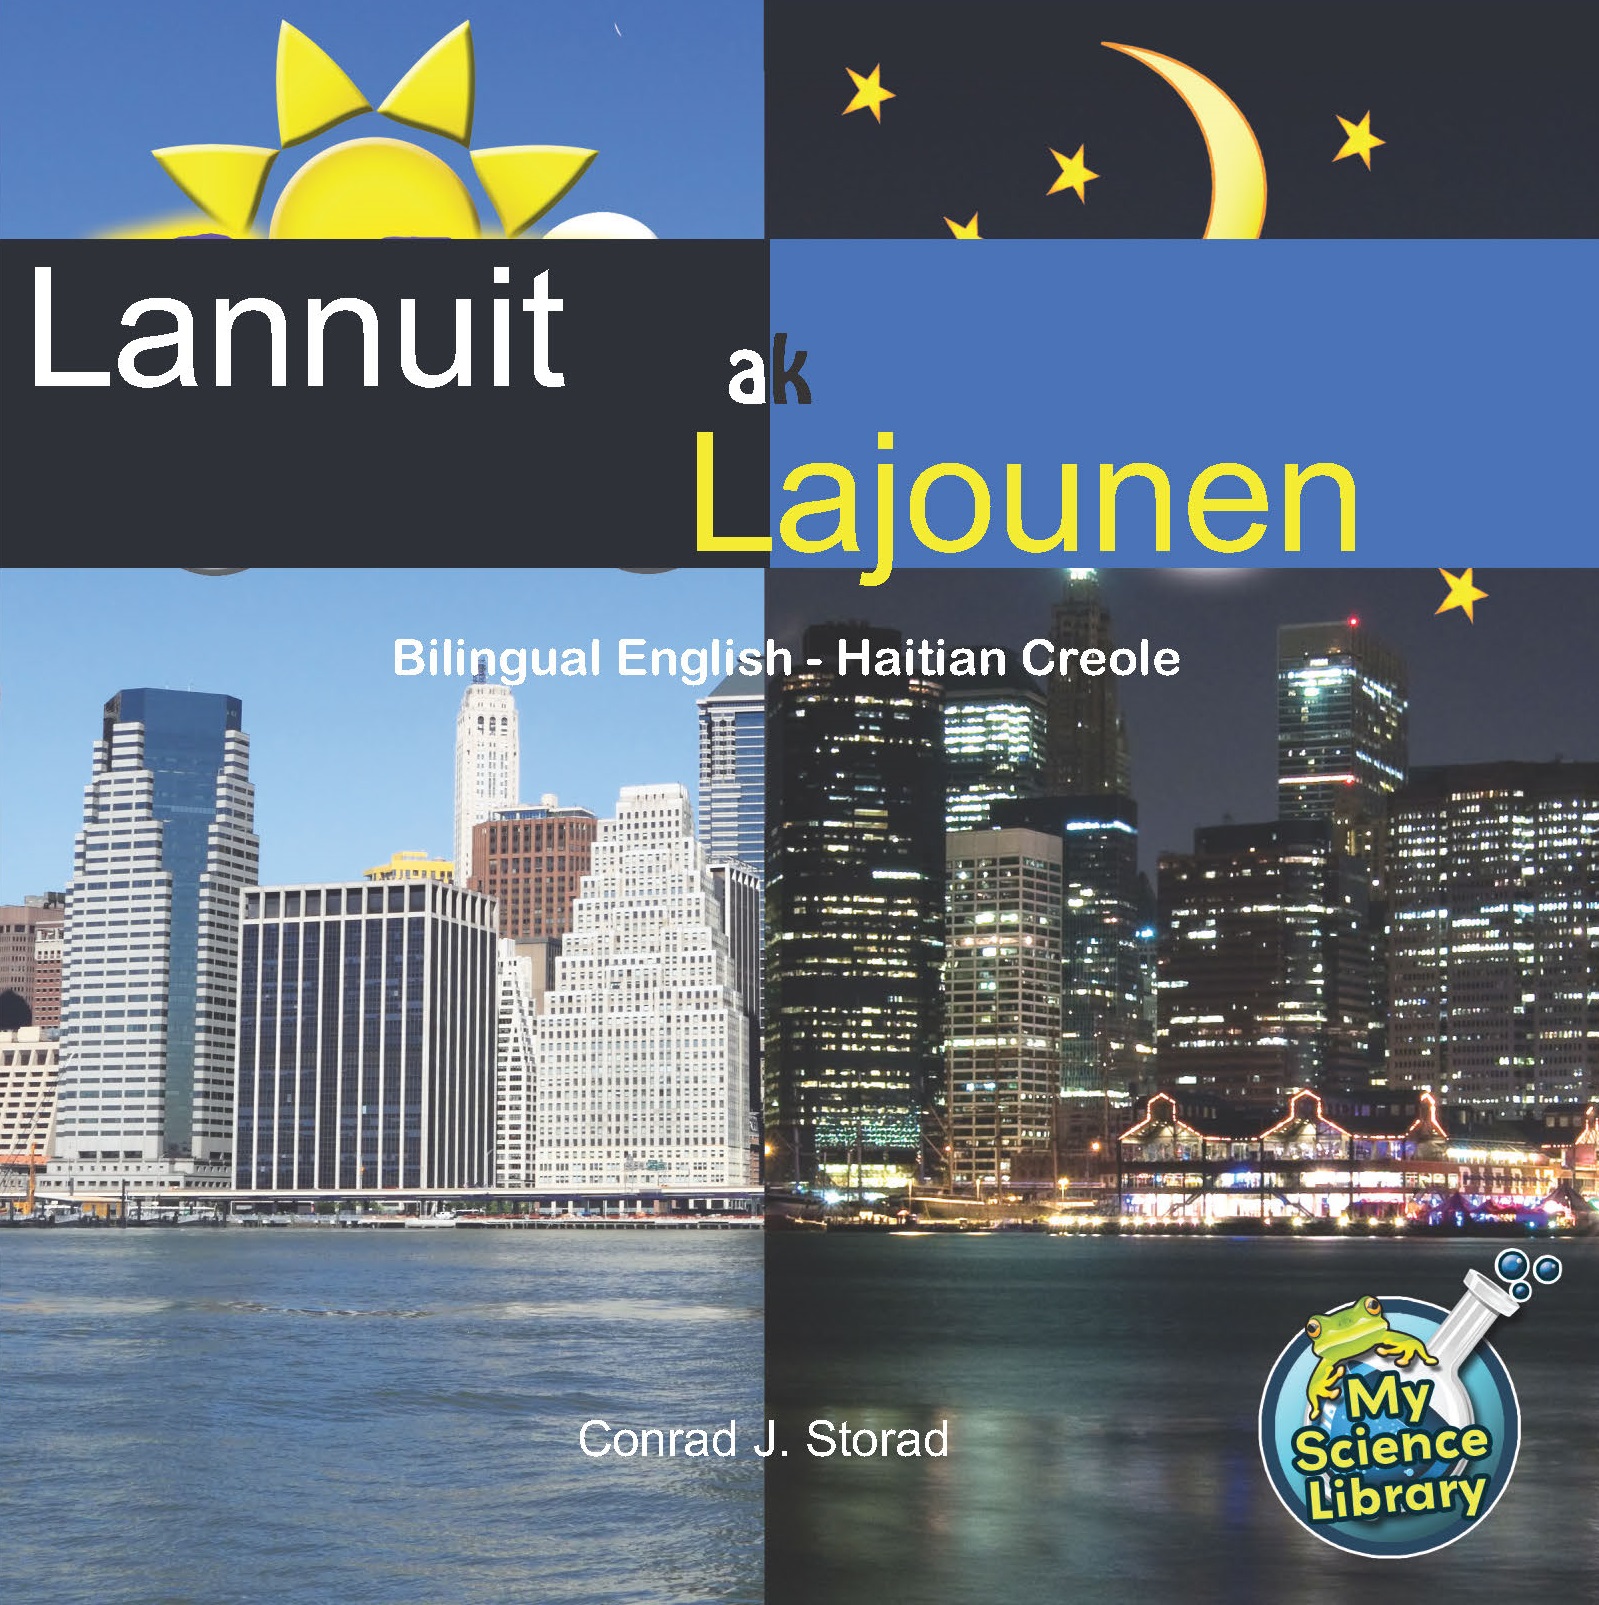 Lannuit ak Lajounen (Bilingual English - Haitian Creole)